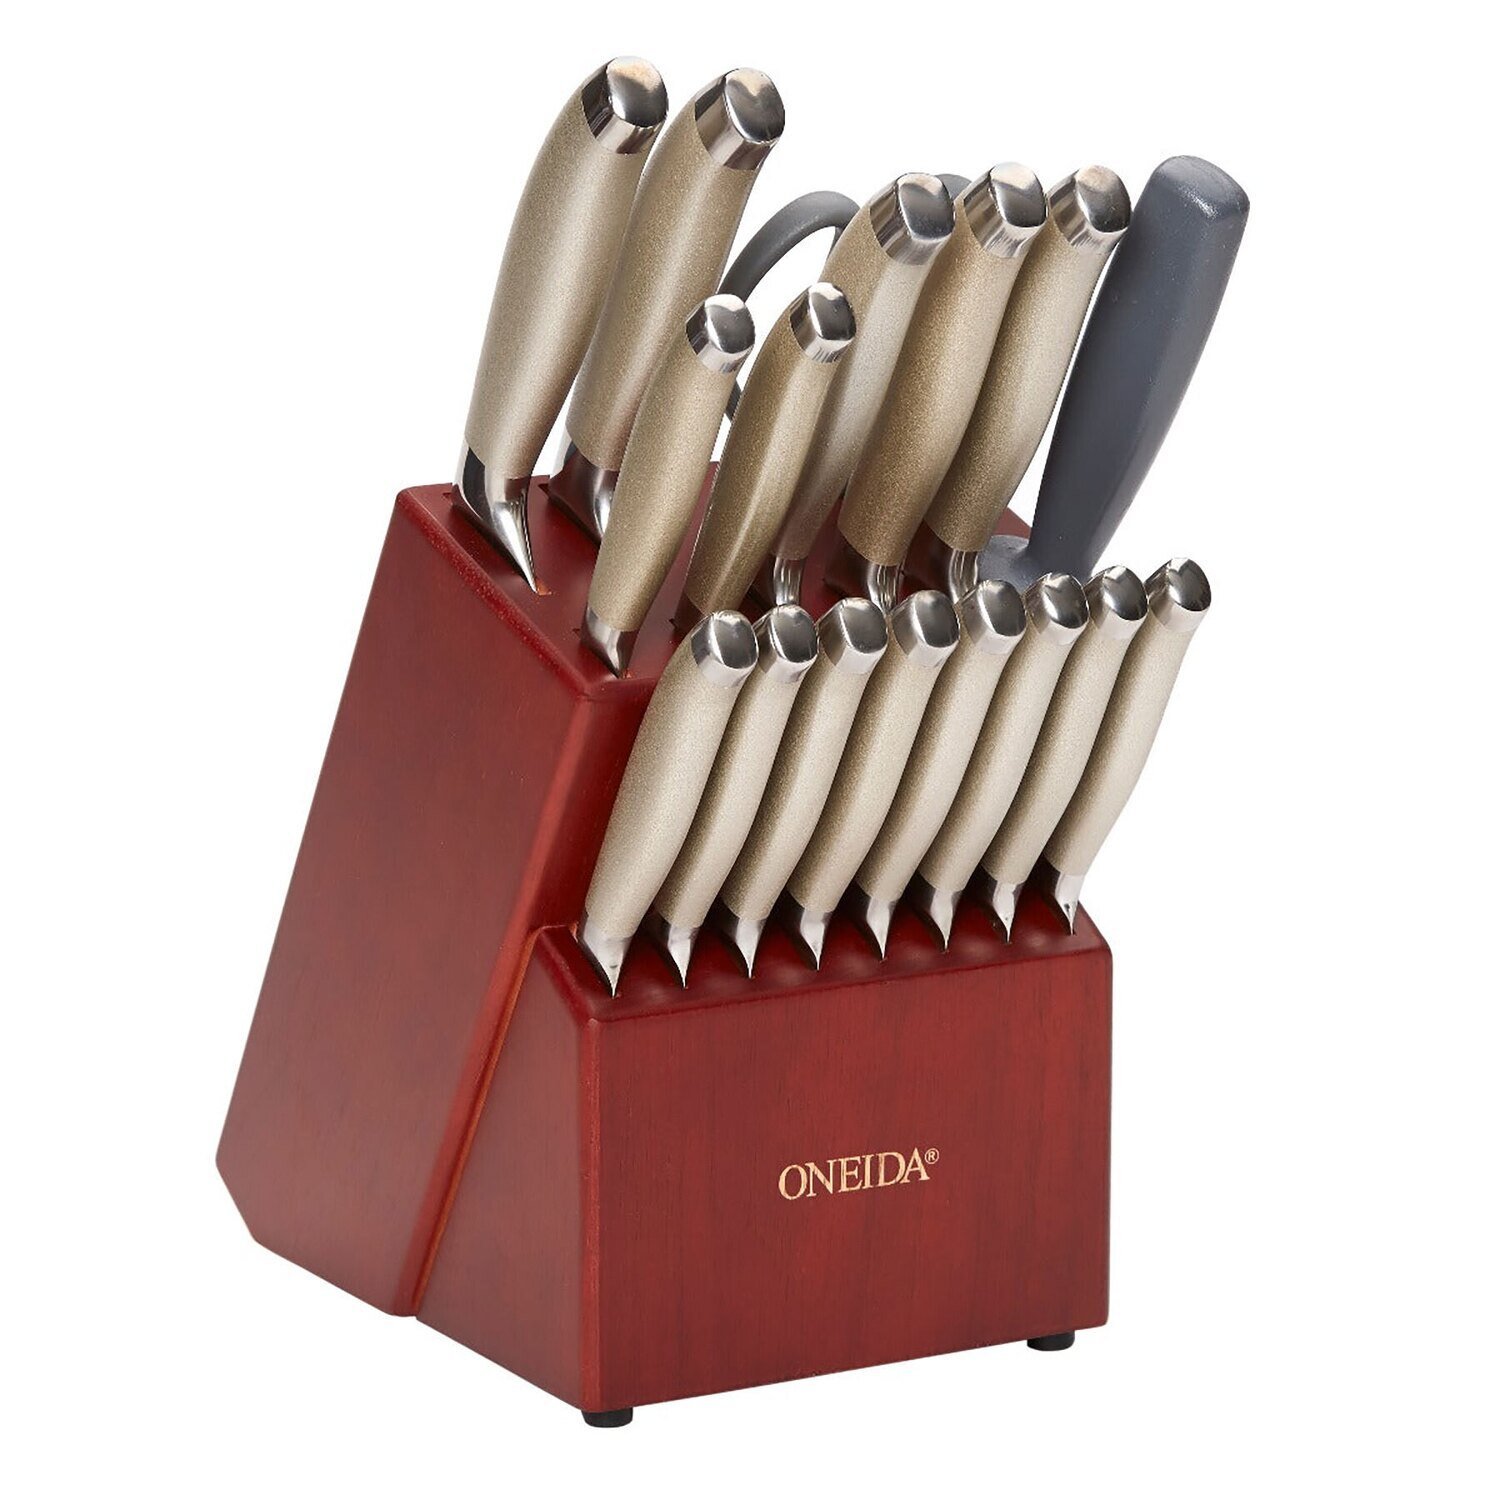 Oneida 18 Piece Stainless Steel Peened Cutlery Set 55274L20